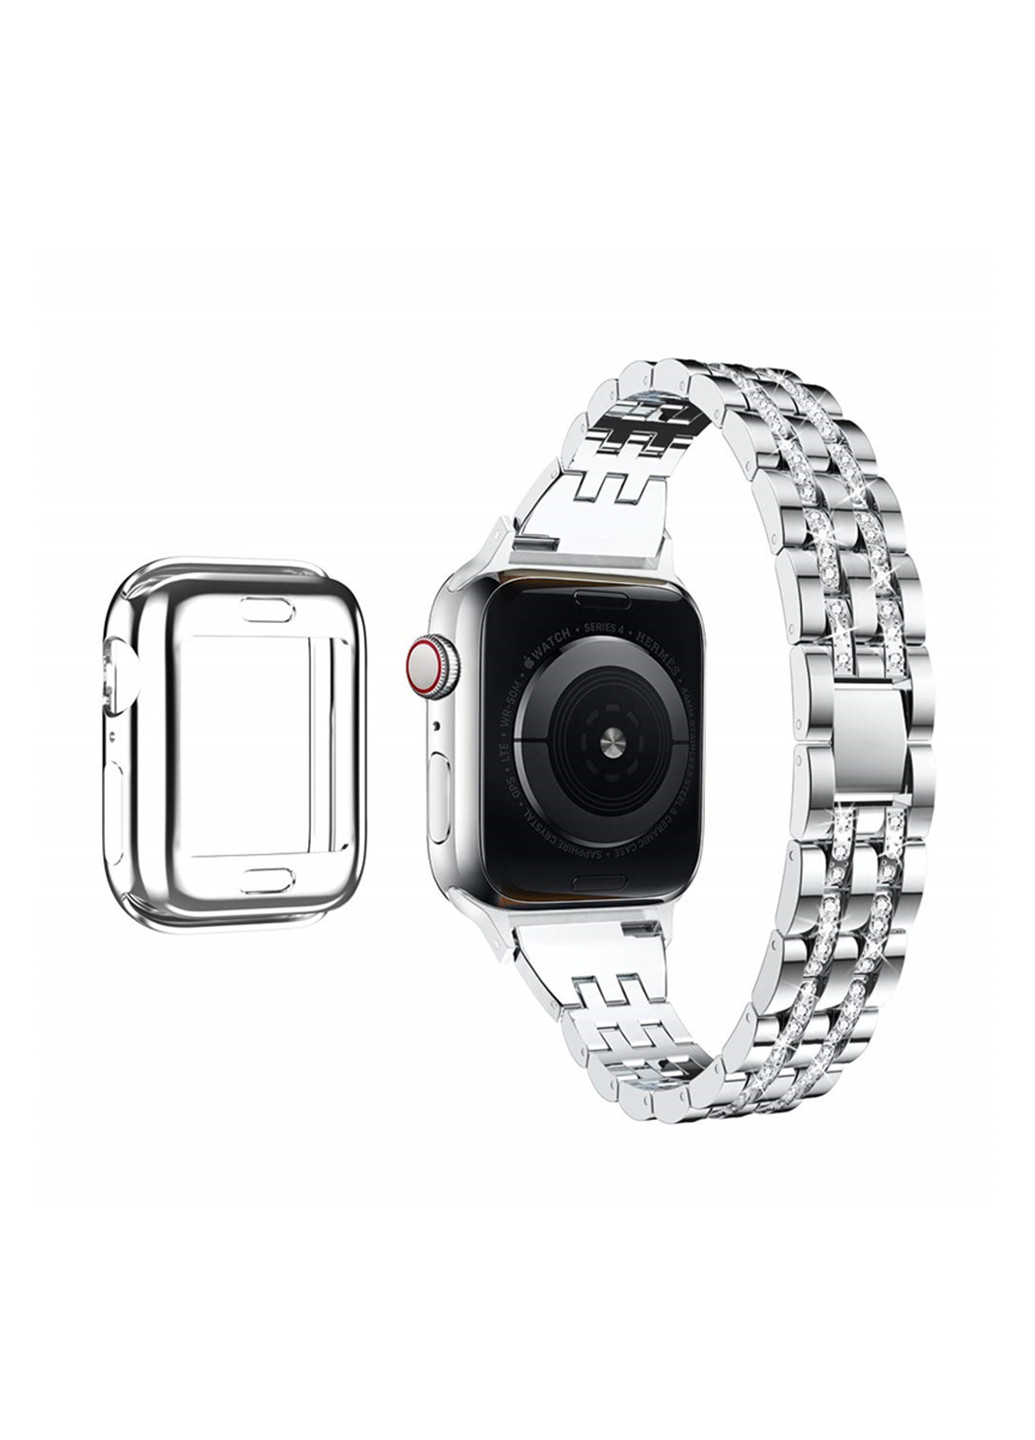 Ремінець для смарт-годин Apple Watch для Series 38/40 1,2,3 з нержавіючої сталі зі стразами Sliver XoKo apple watch для series 38/40 1,2,3 из нержавеющей стали со стразами sliver (156223615)